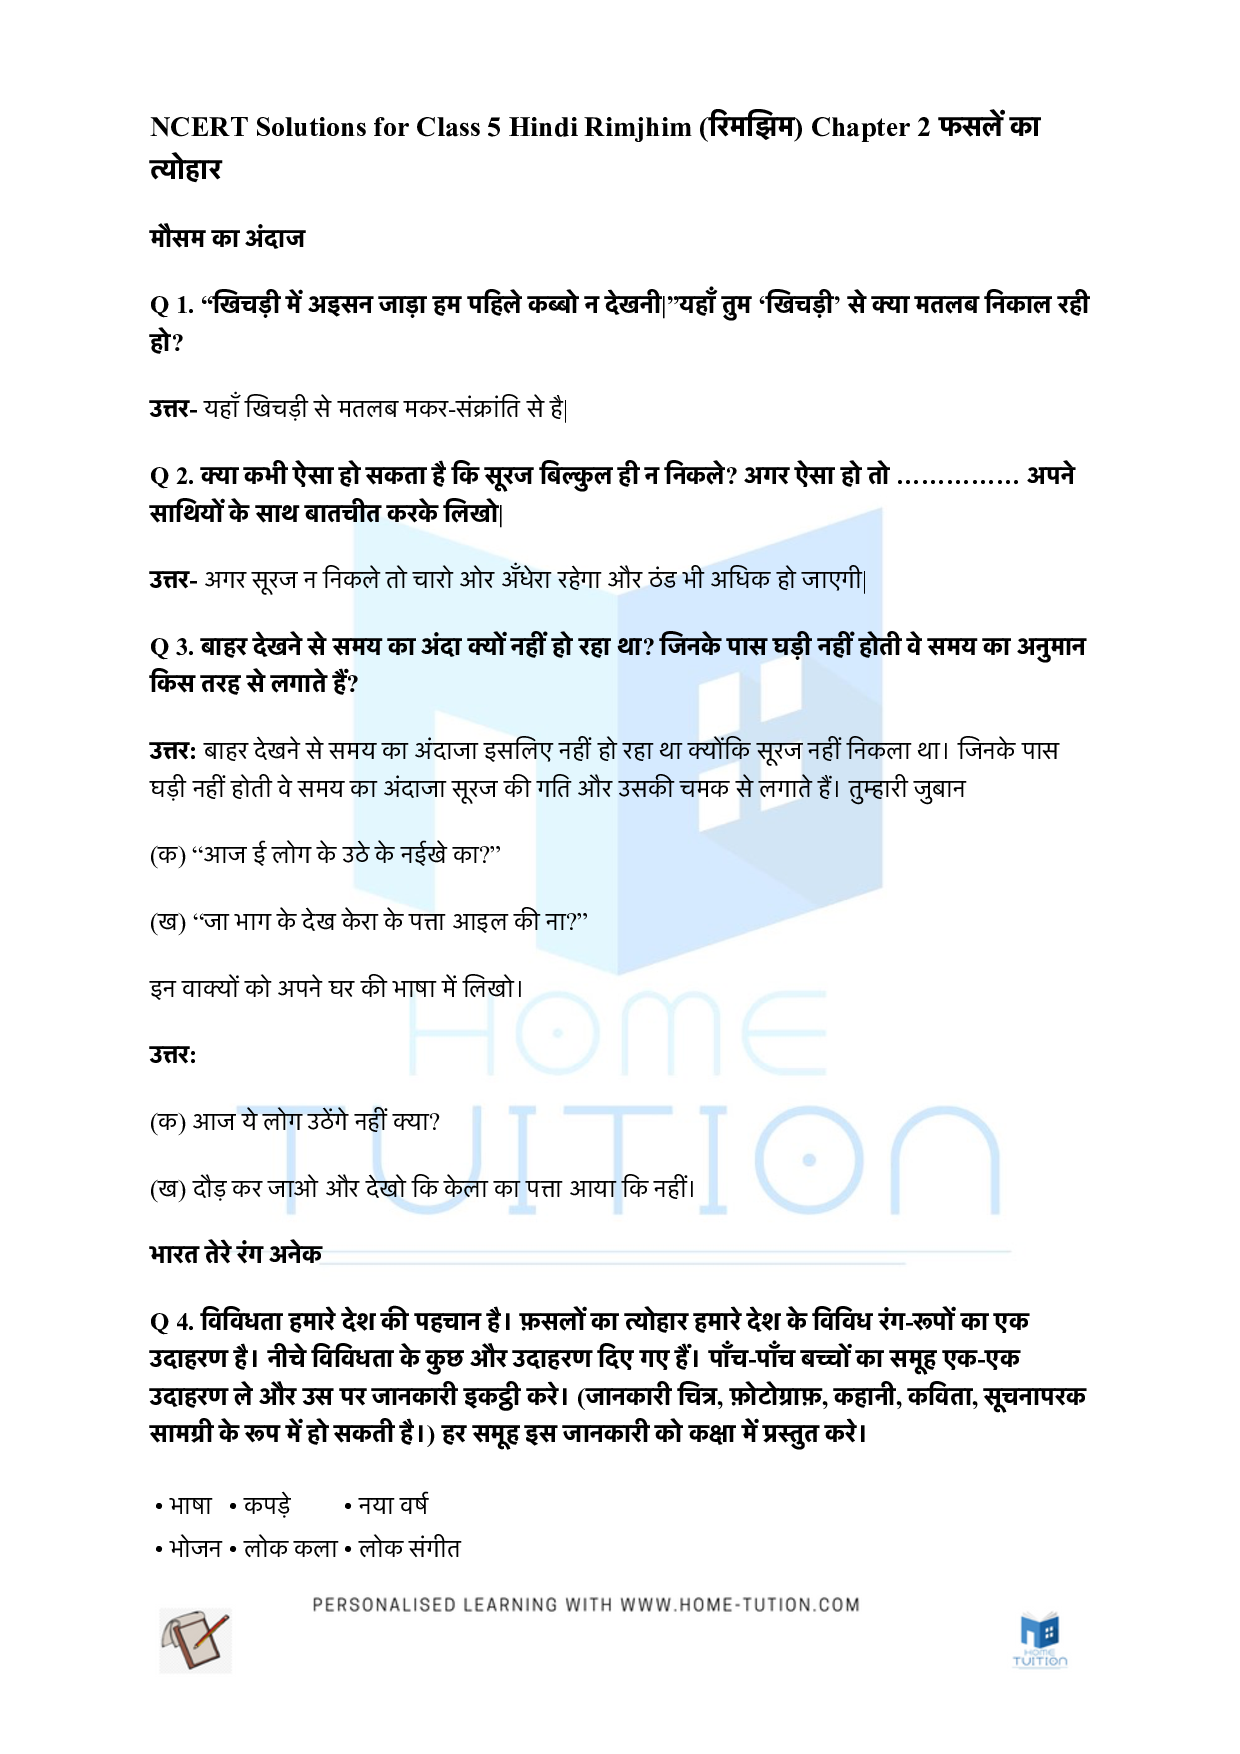 NCERT Solutions for Class 5 Hindi Rimjhim Chapter 2 फसलें का त्योहार